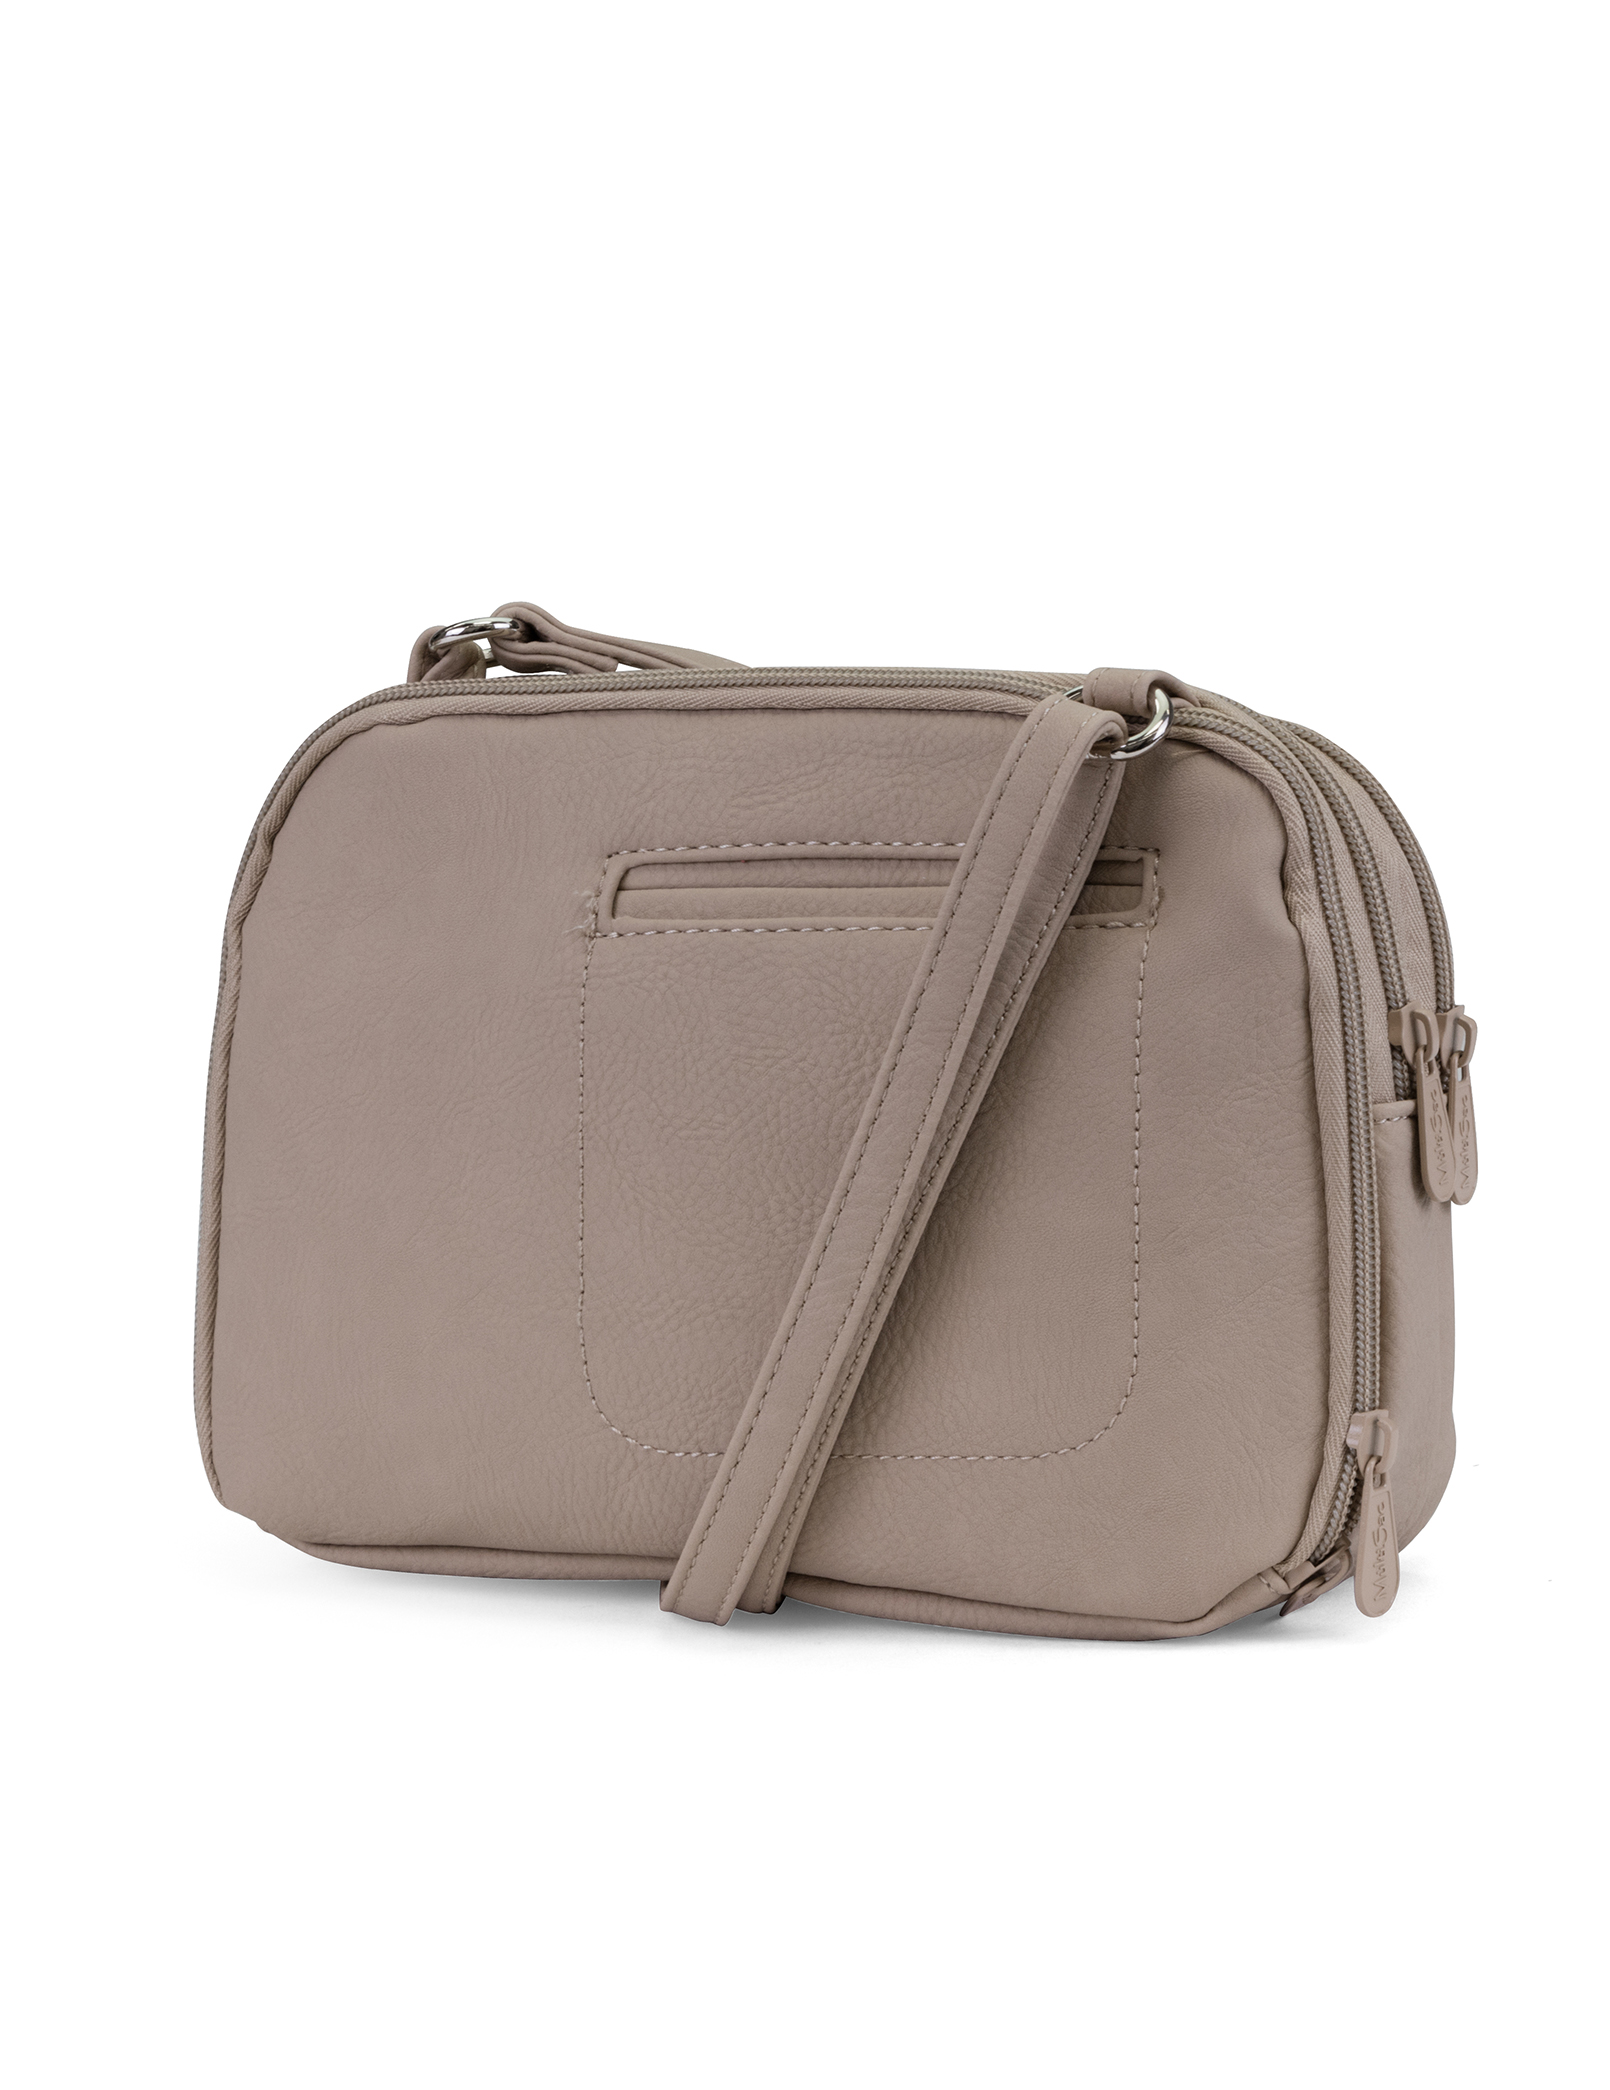 Multisac Zippy Triple Compartment Crossbody Bag for Women - Walmart.com